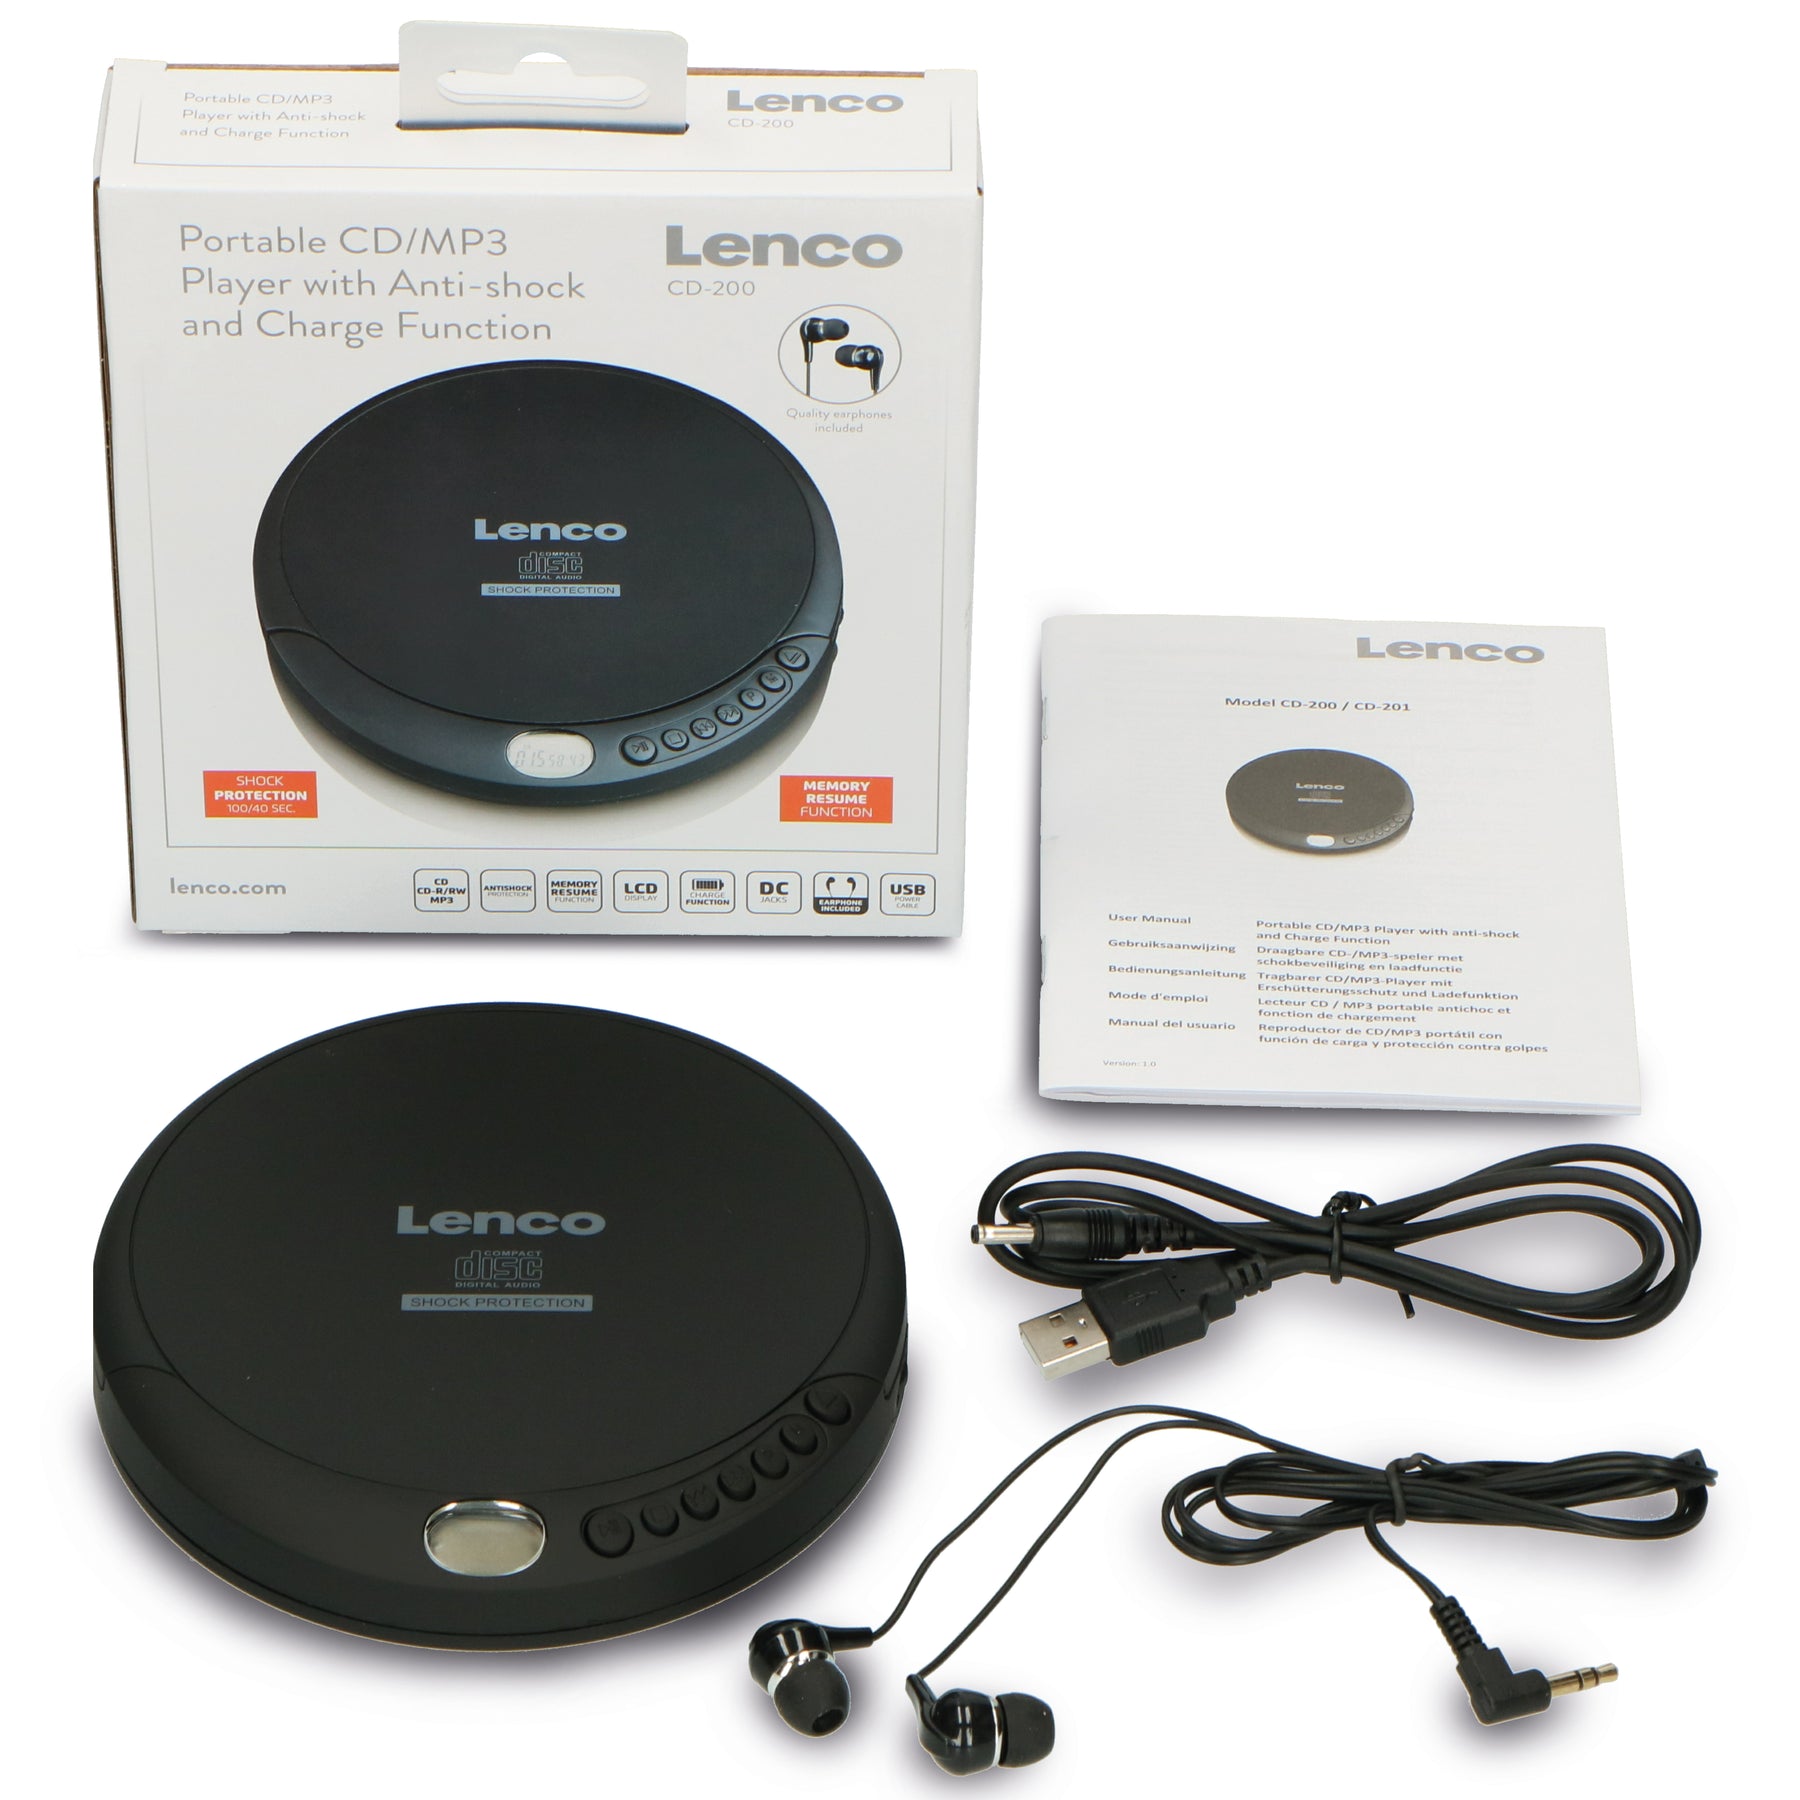 CD-200 with - Lenco anti-shock Discman